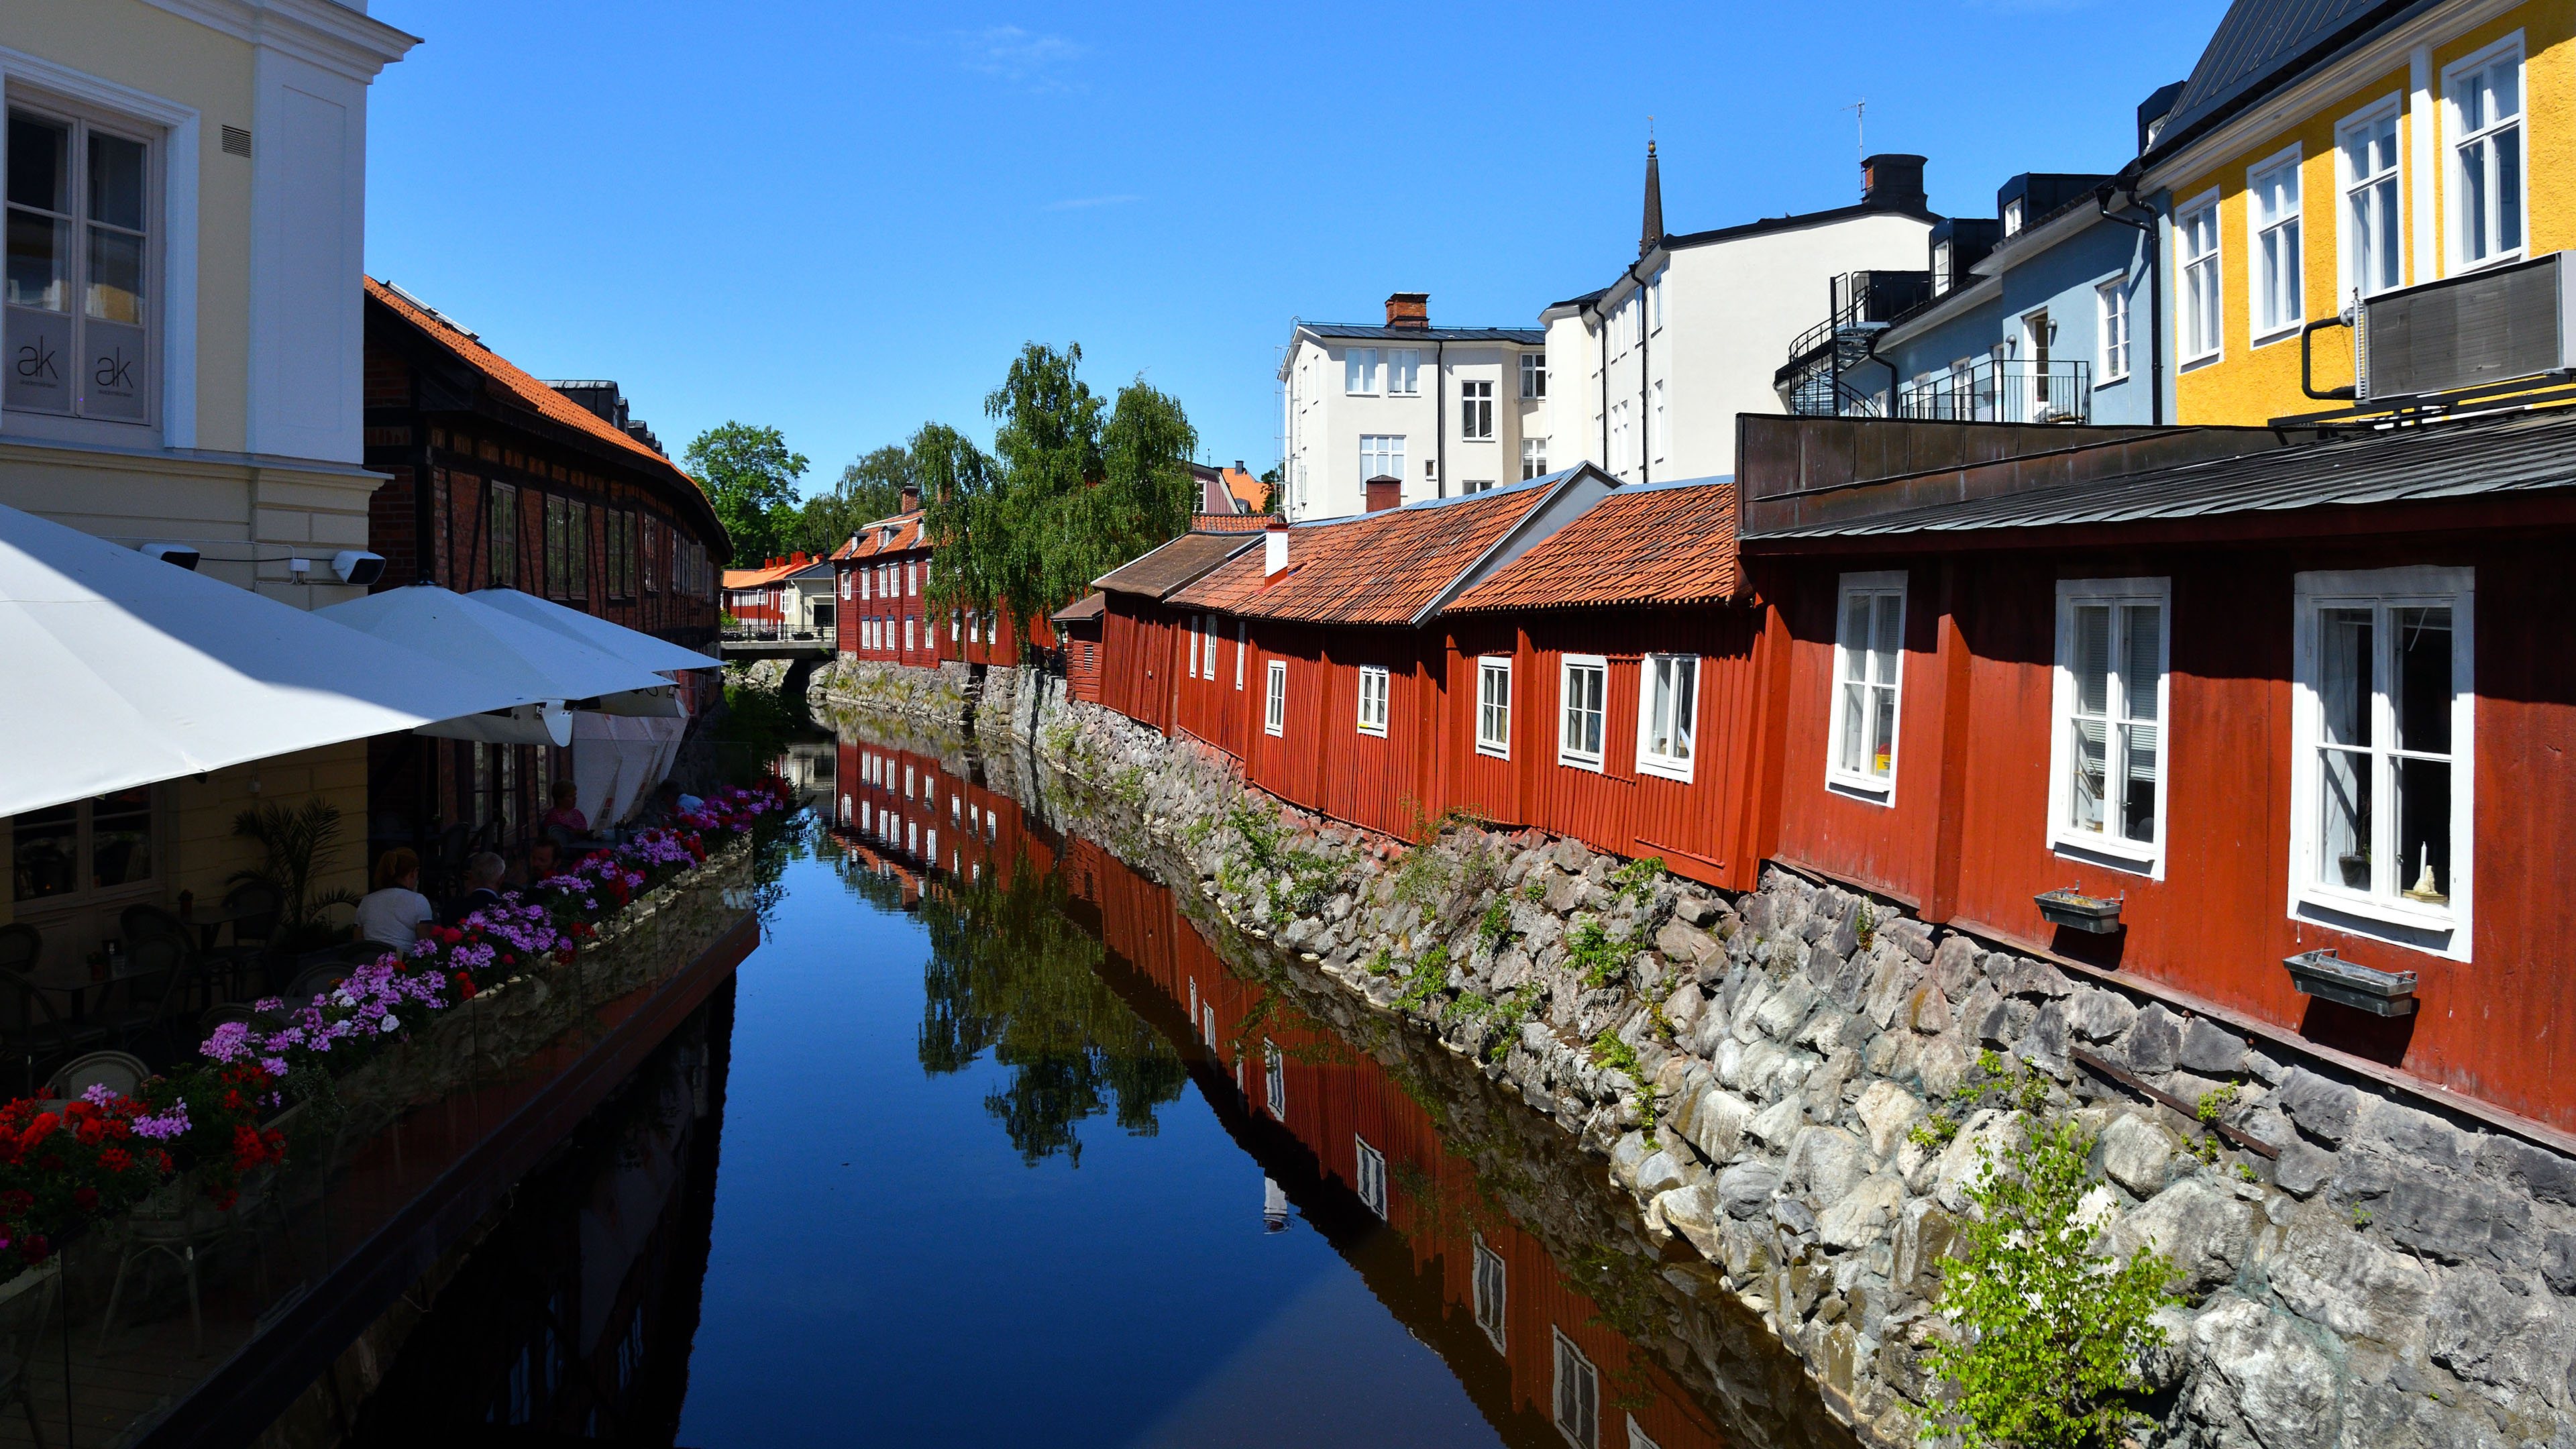 Buildings and Svartån